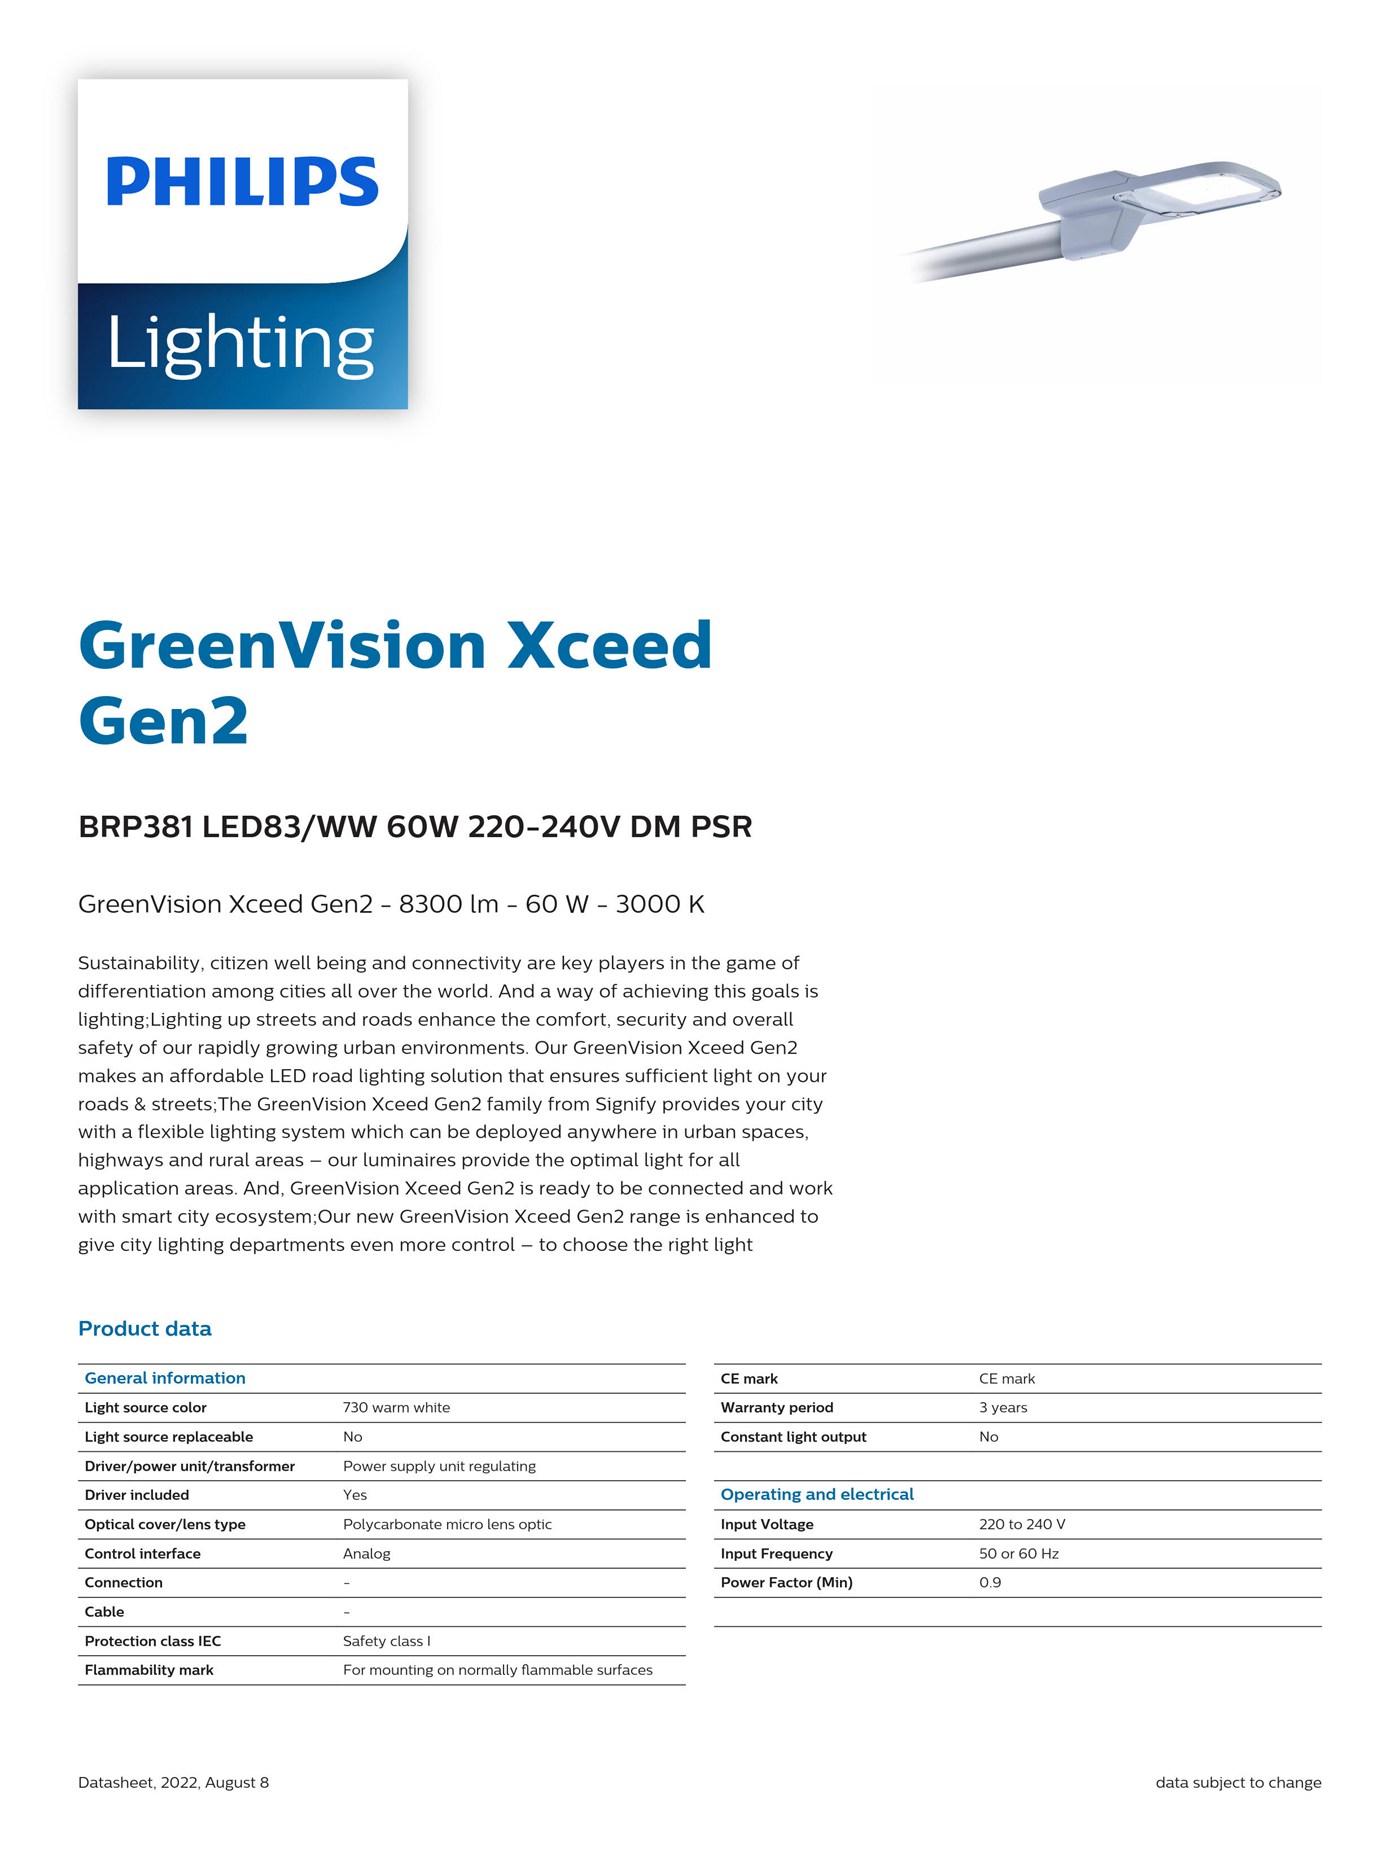 PHILIPS GreenVision Xceed Gen2 BRP381 LED83/WW 60W 220-240V DM PSR 911401878098